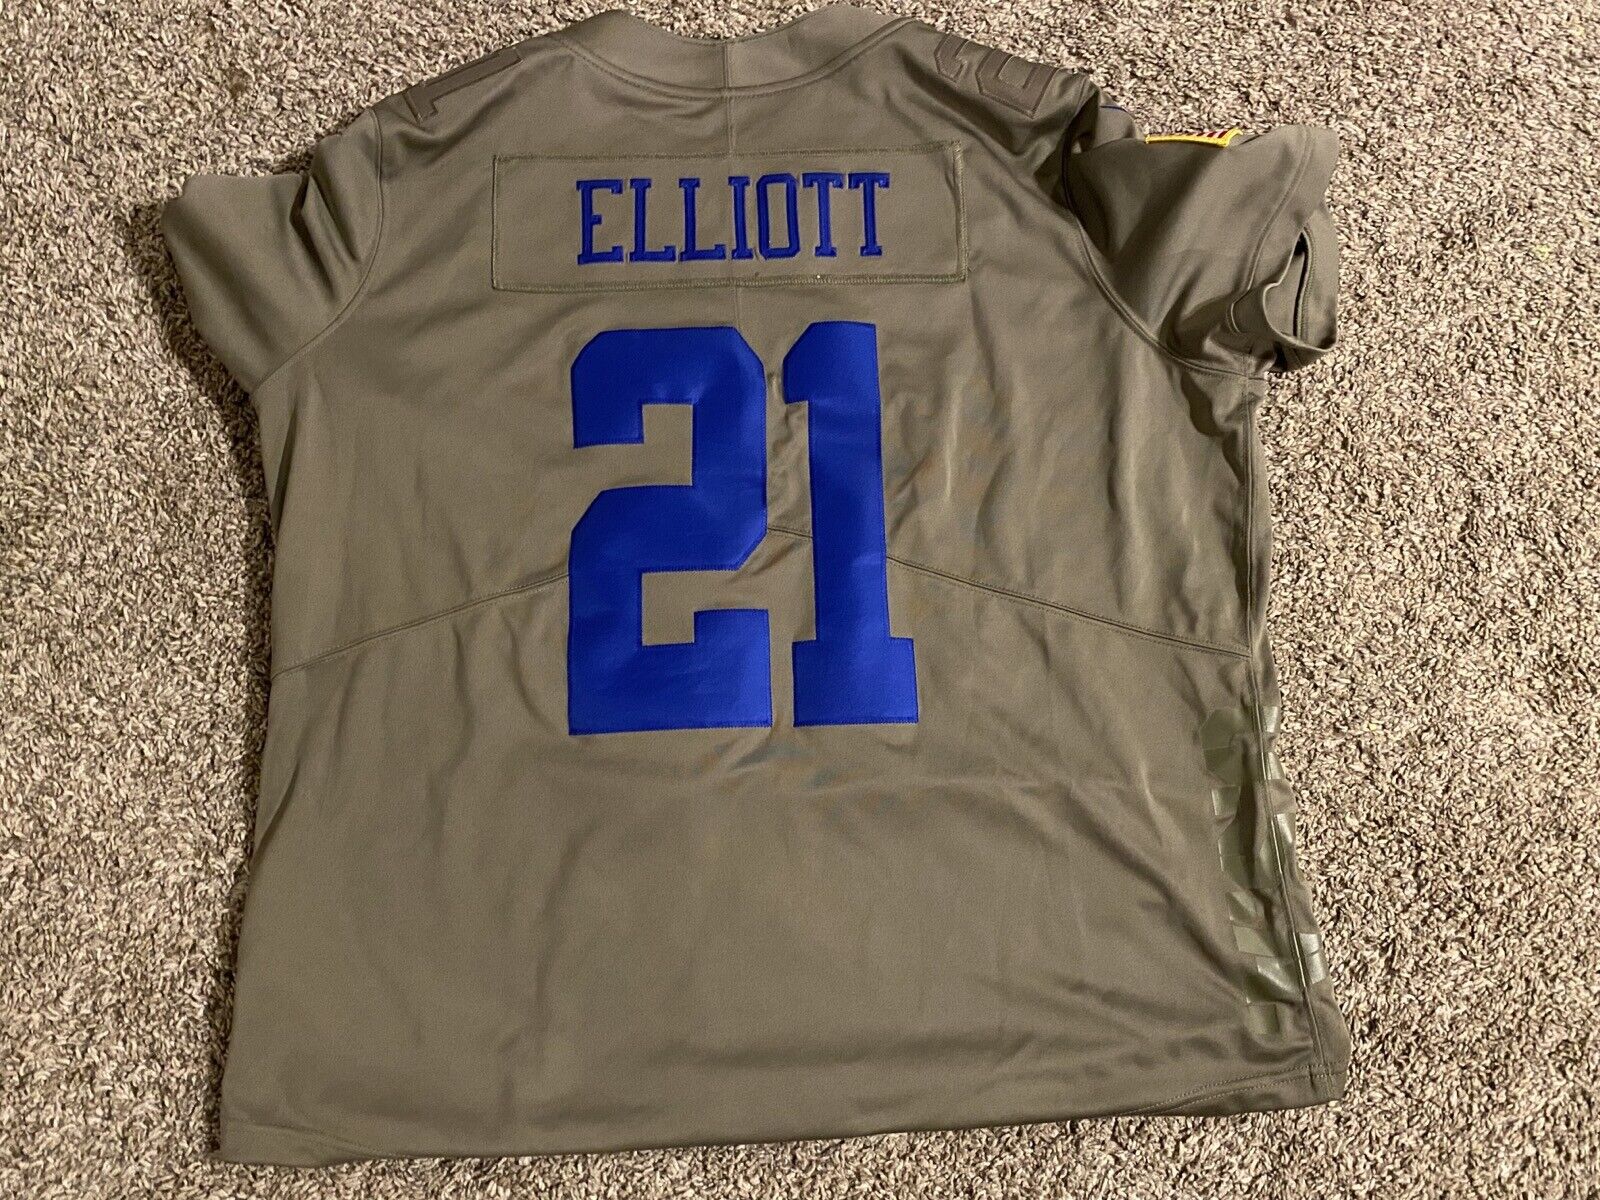 elliott salute to service jersey